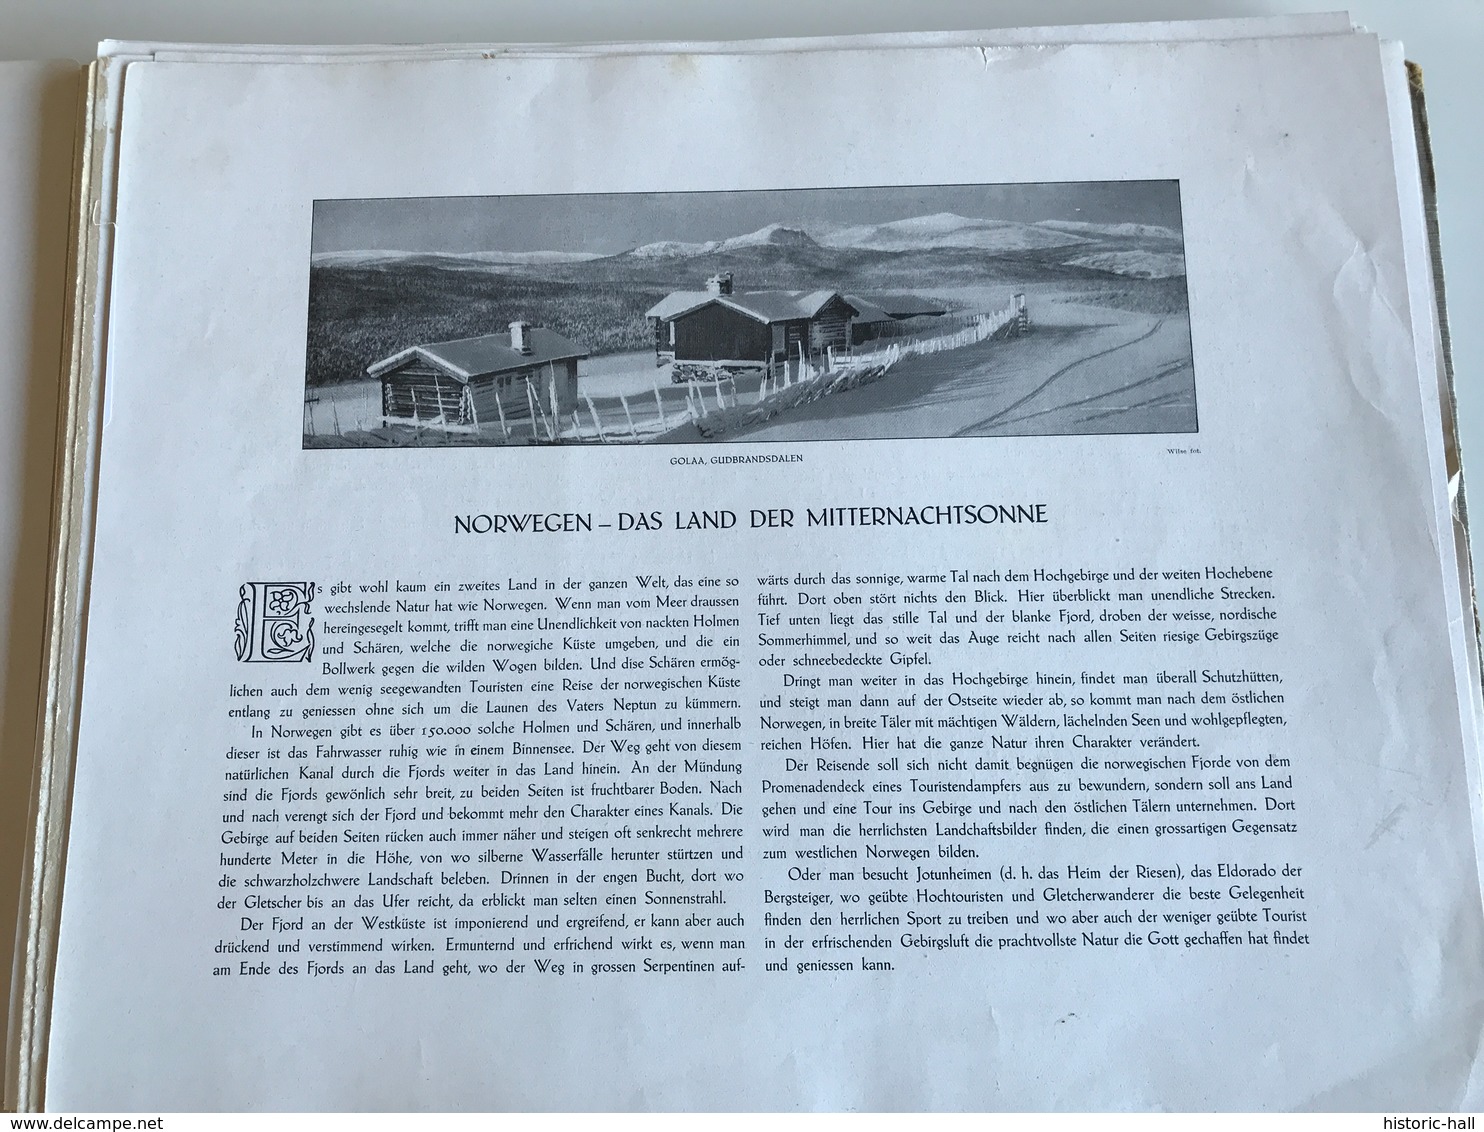 NORGE Midnatssolens land - 1925 - Mittet & Co Kunstforlag